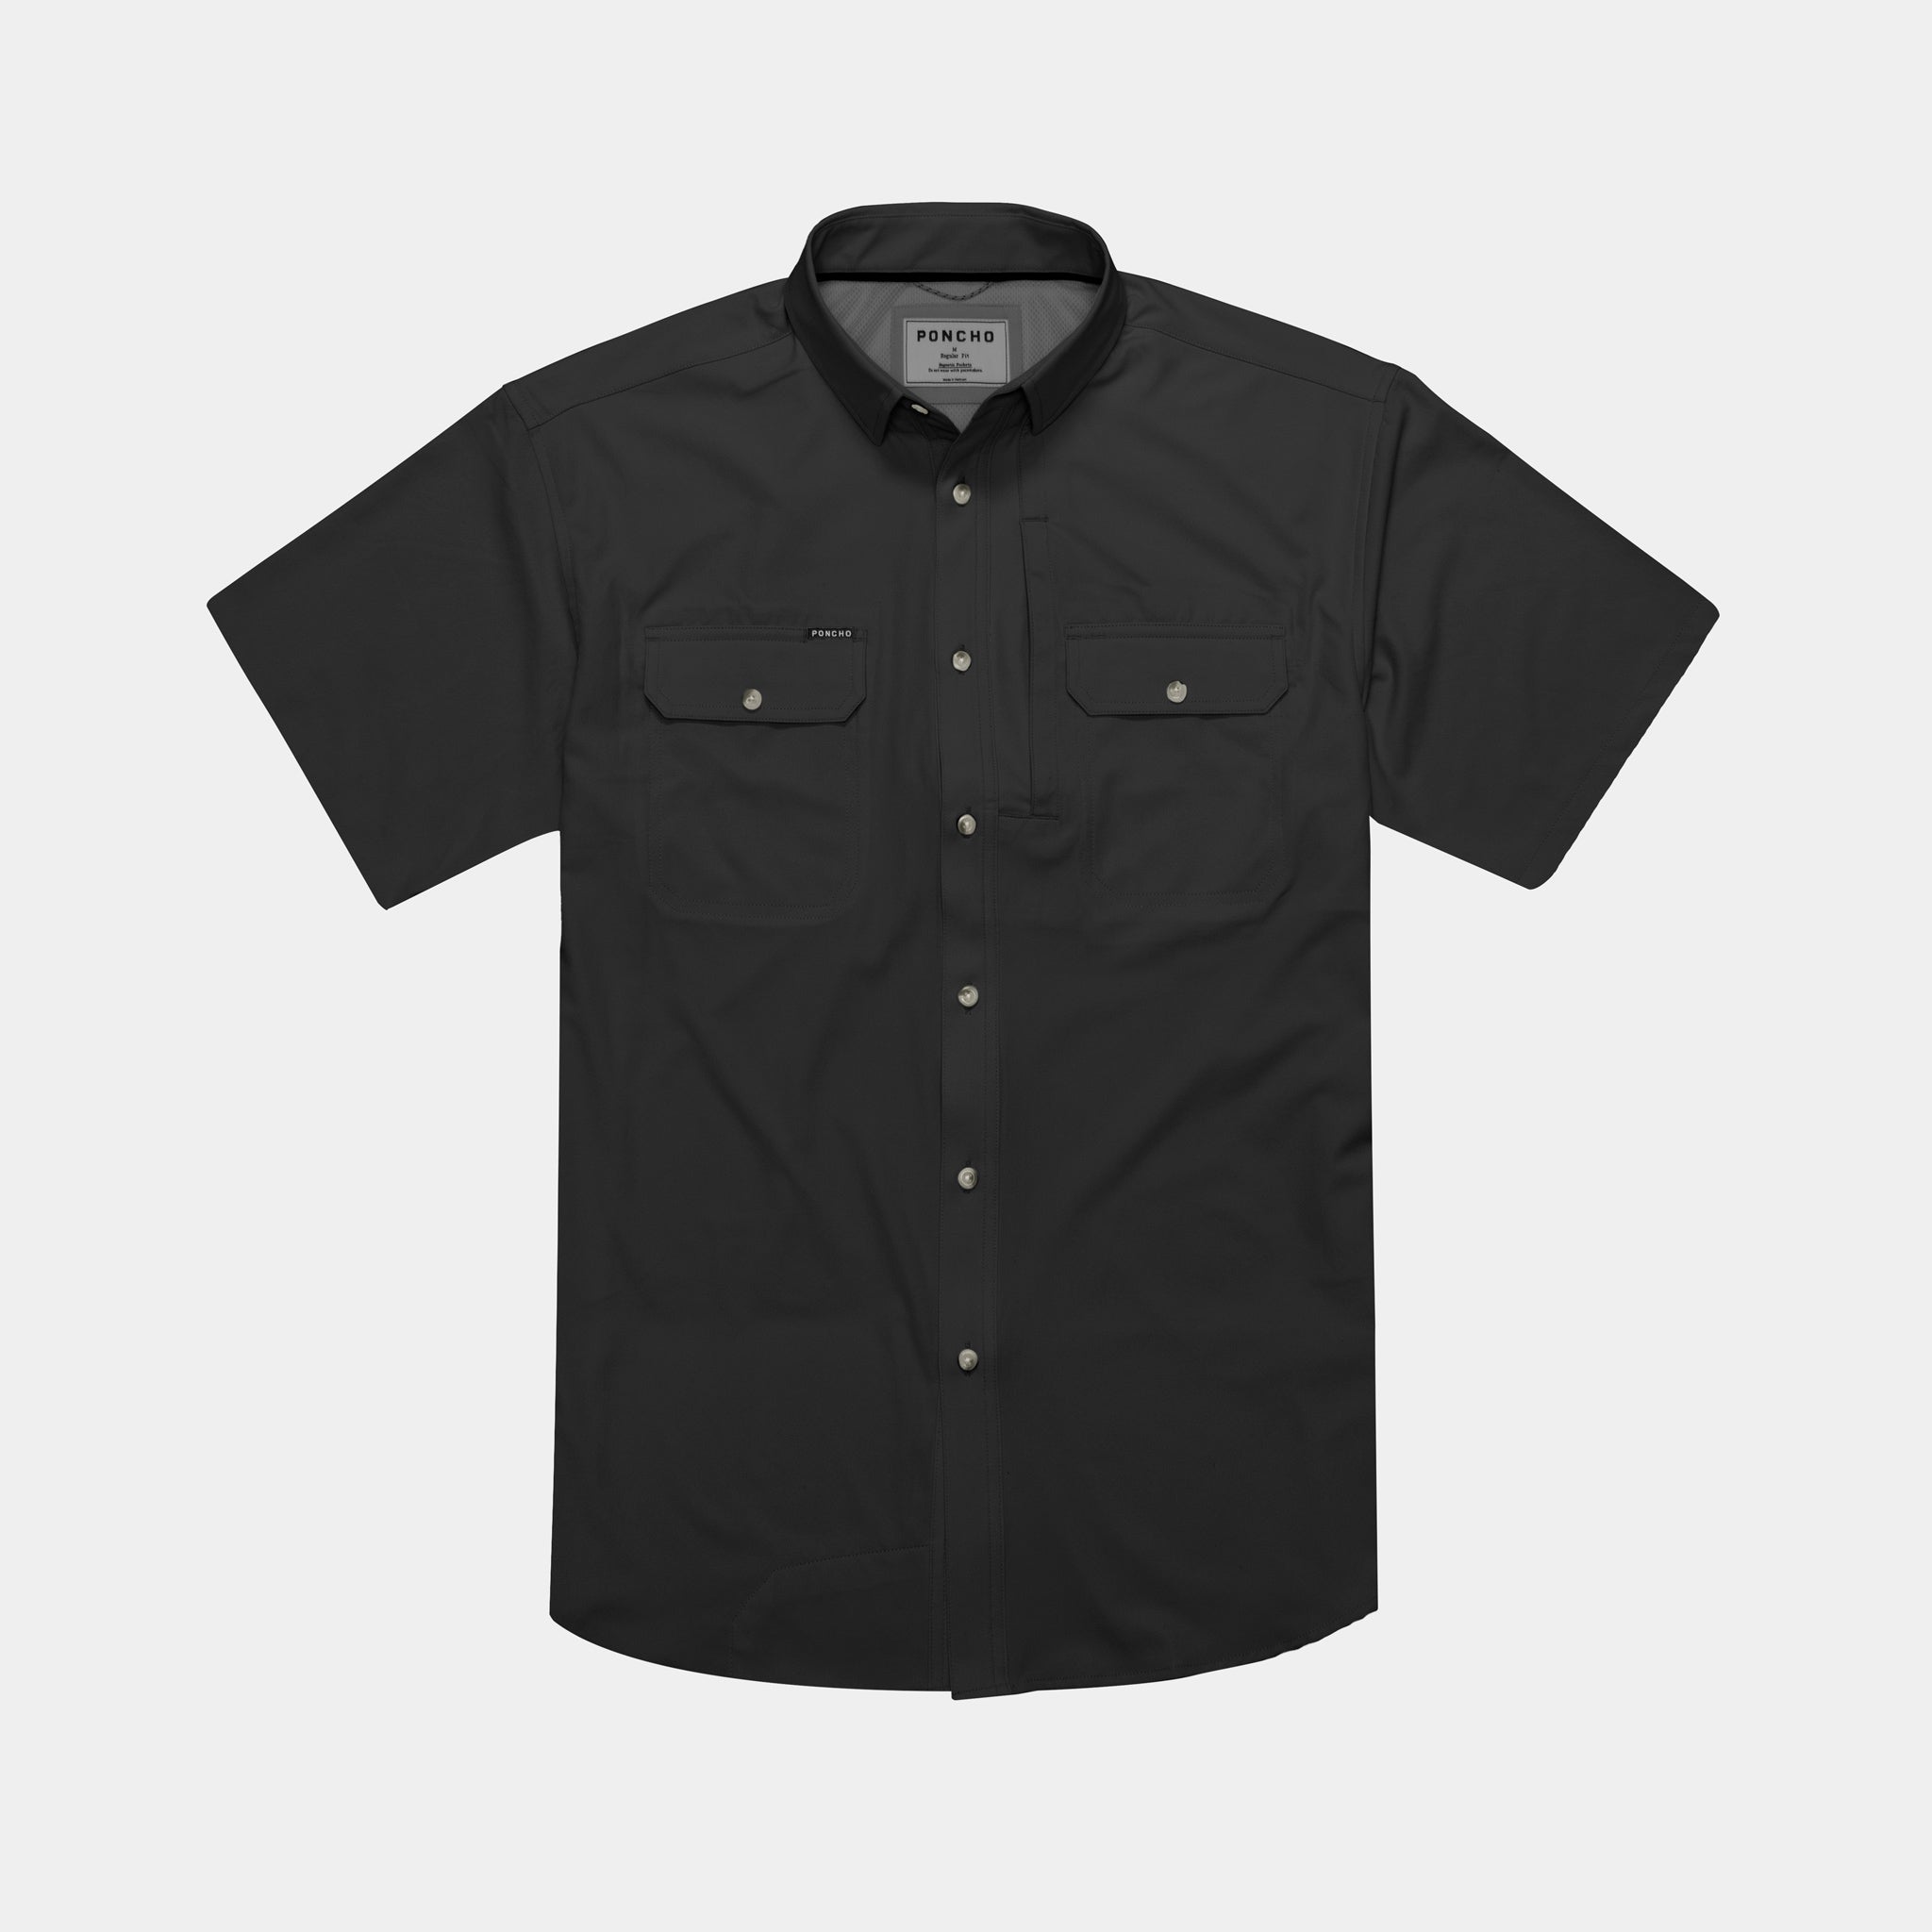 Poncho Fishing Shirt | Black Short Sleeve